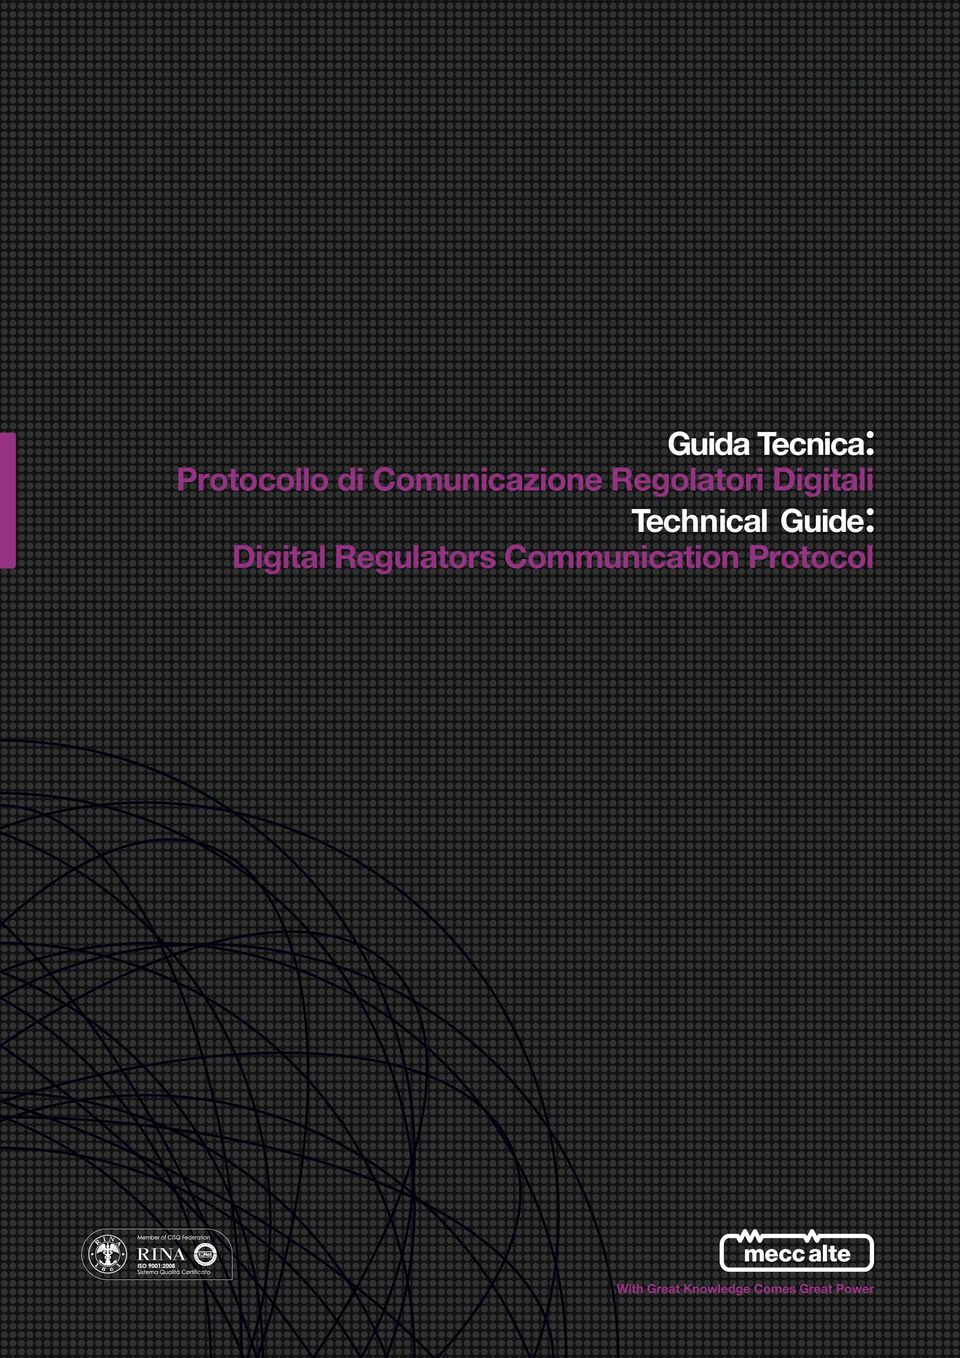 Digitali Technical Guide